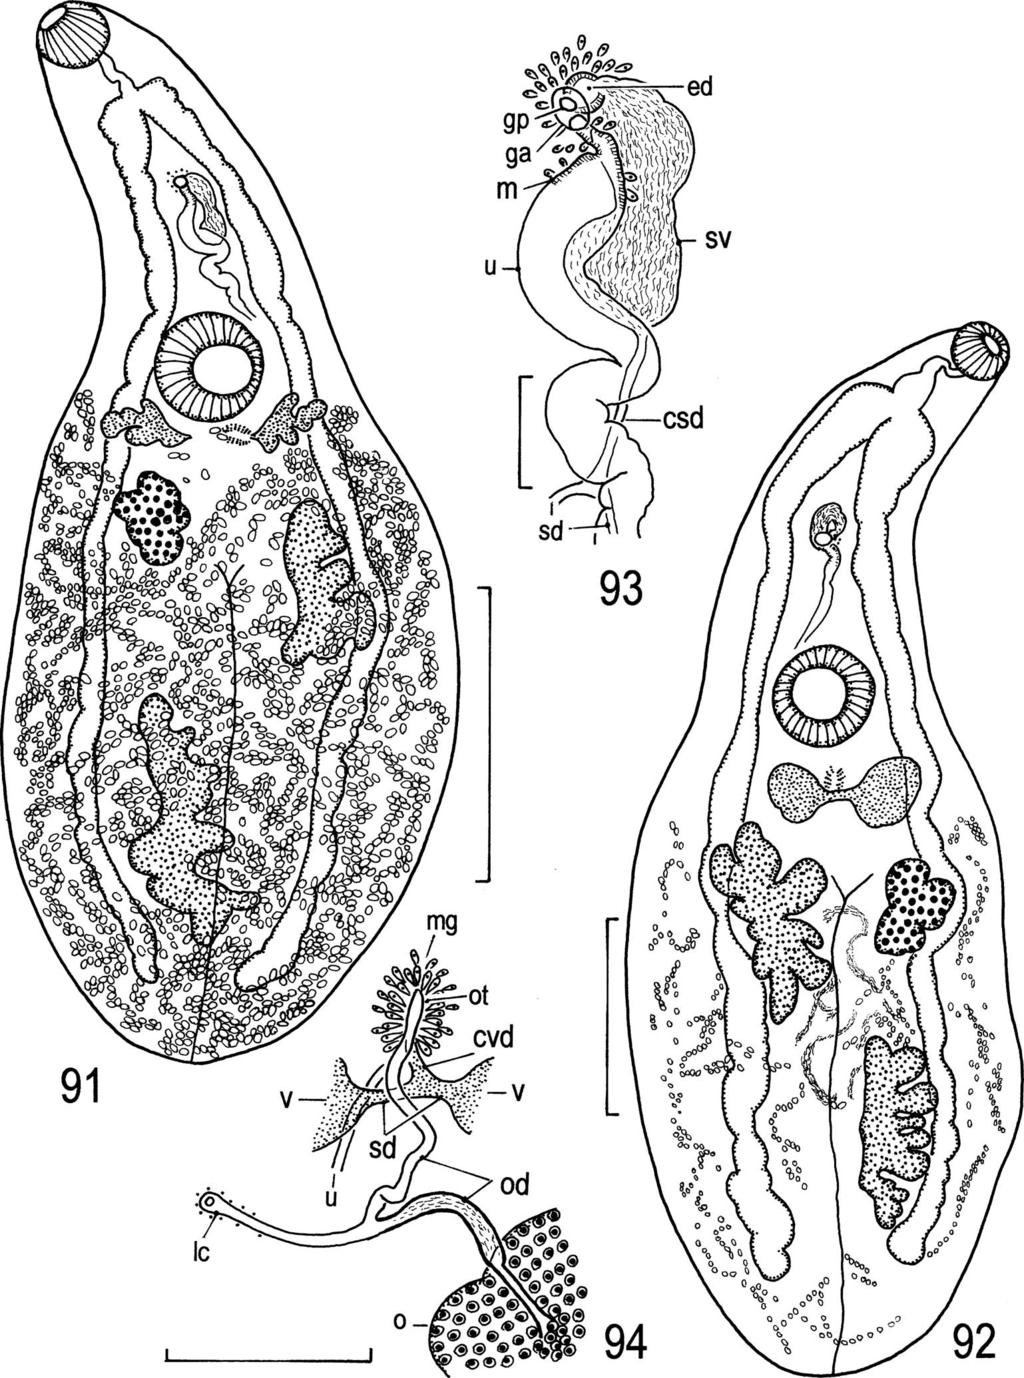 66 T. Shimazu et al. Figs. 91 94. Phyllodistomum parasiluri. Adult specimens.